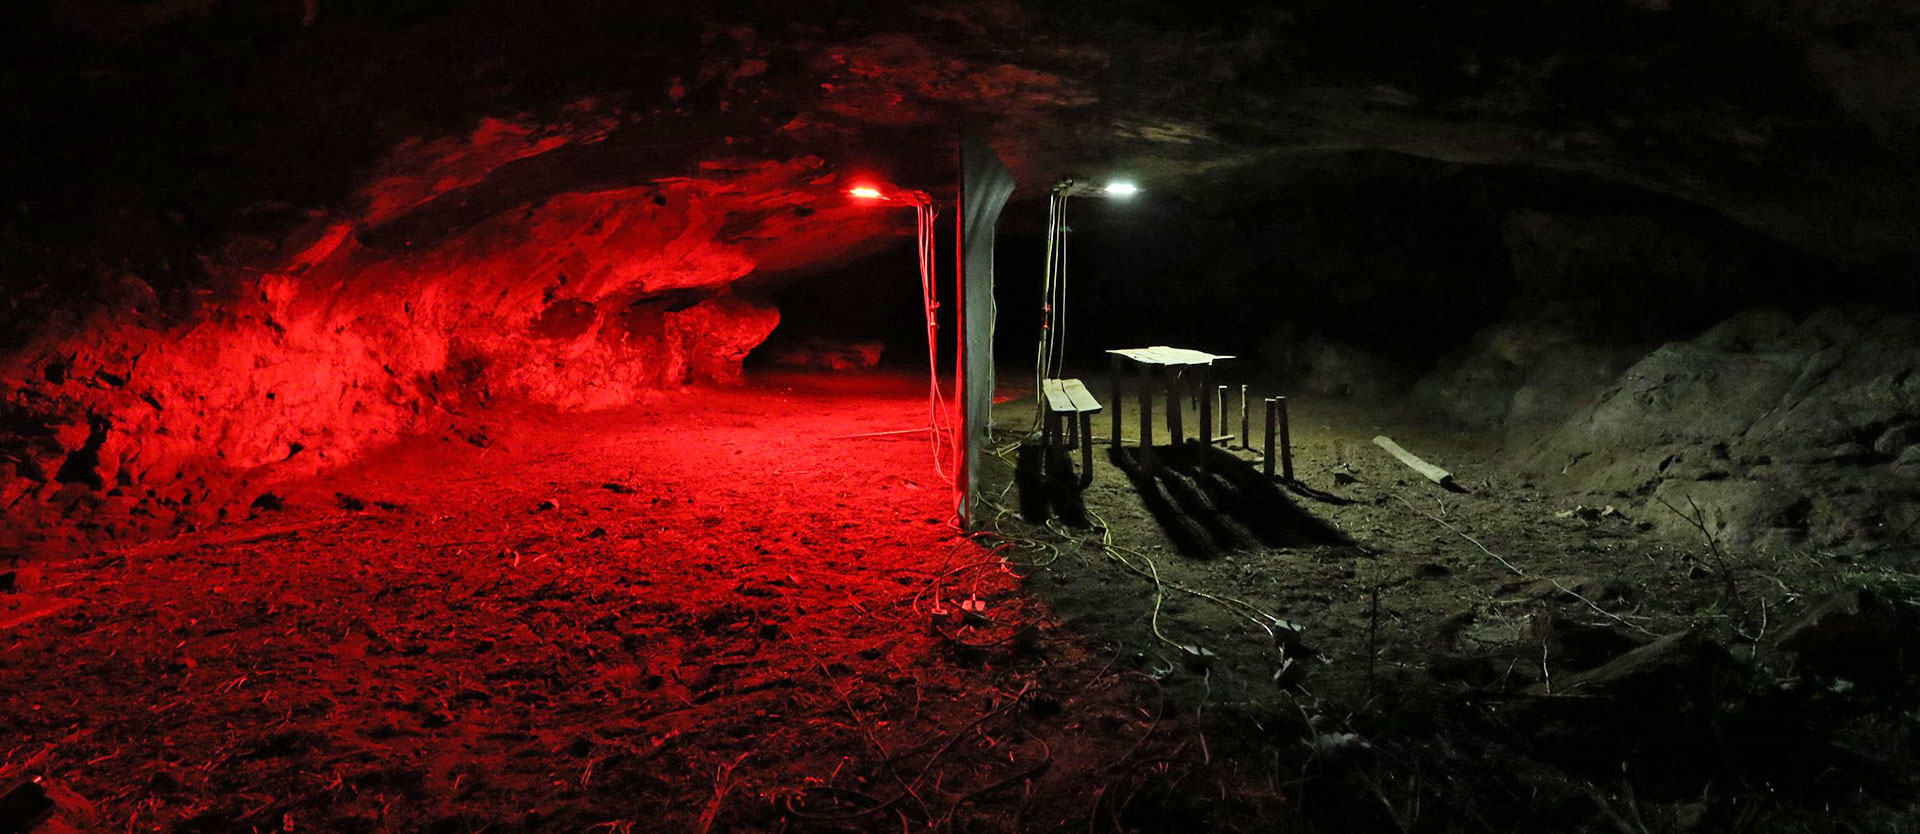 Illumination drives bats out of caves 